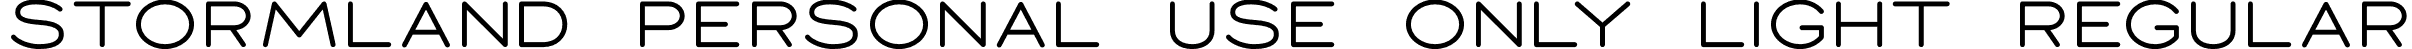 Stormland PERSONAL USE ONLY Light Regular font | StormlandPersonalUseOnlyLight-VGJgx.otf